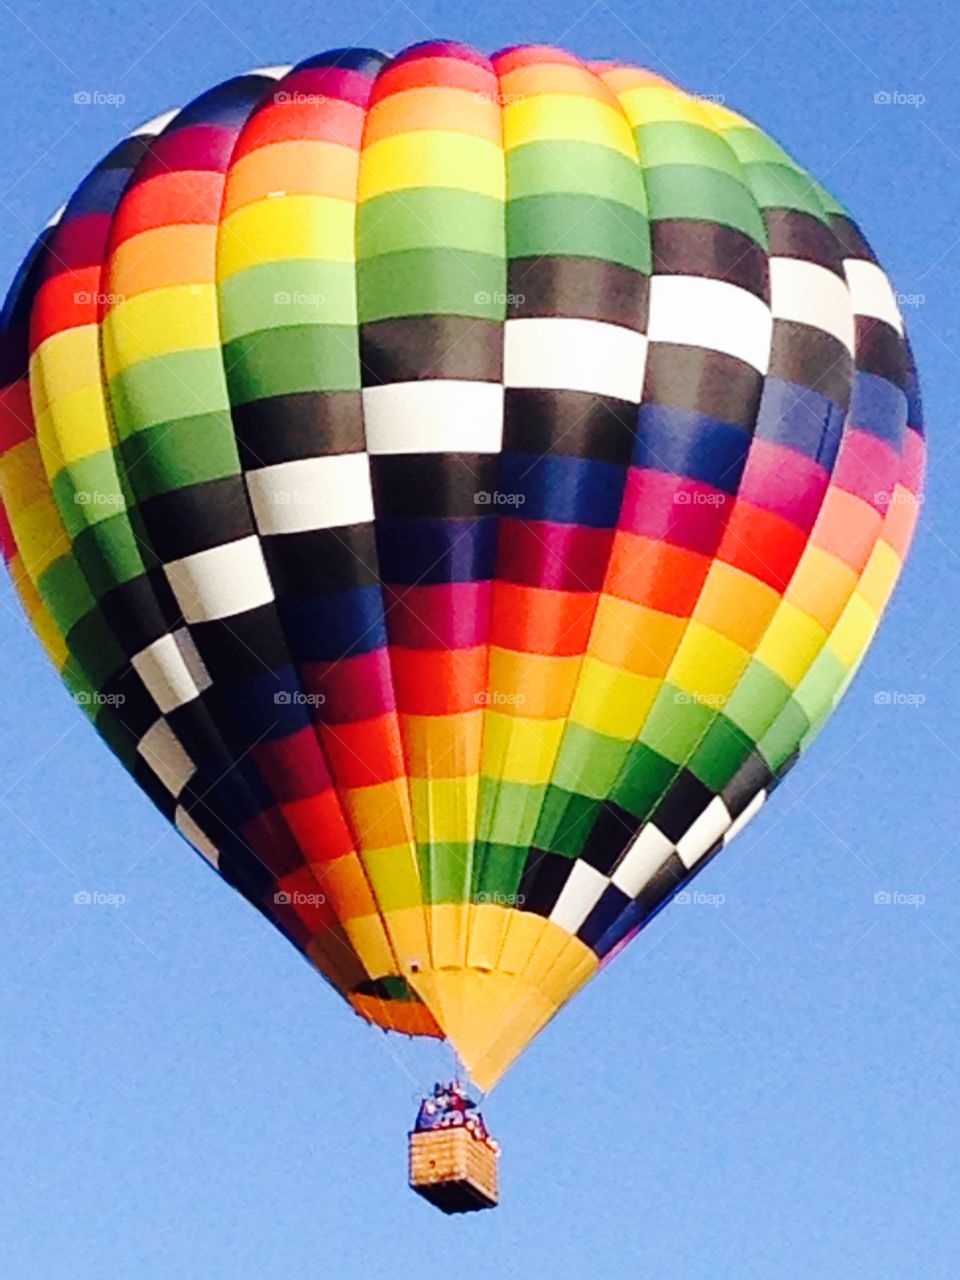 Hot air balloon taking off Statesville North Carolina. 